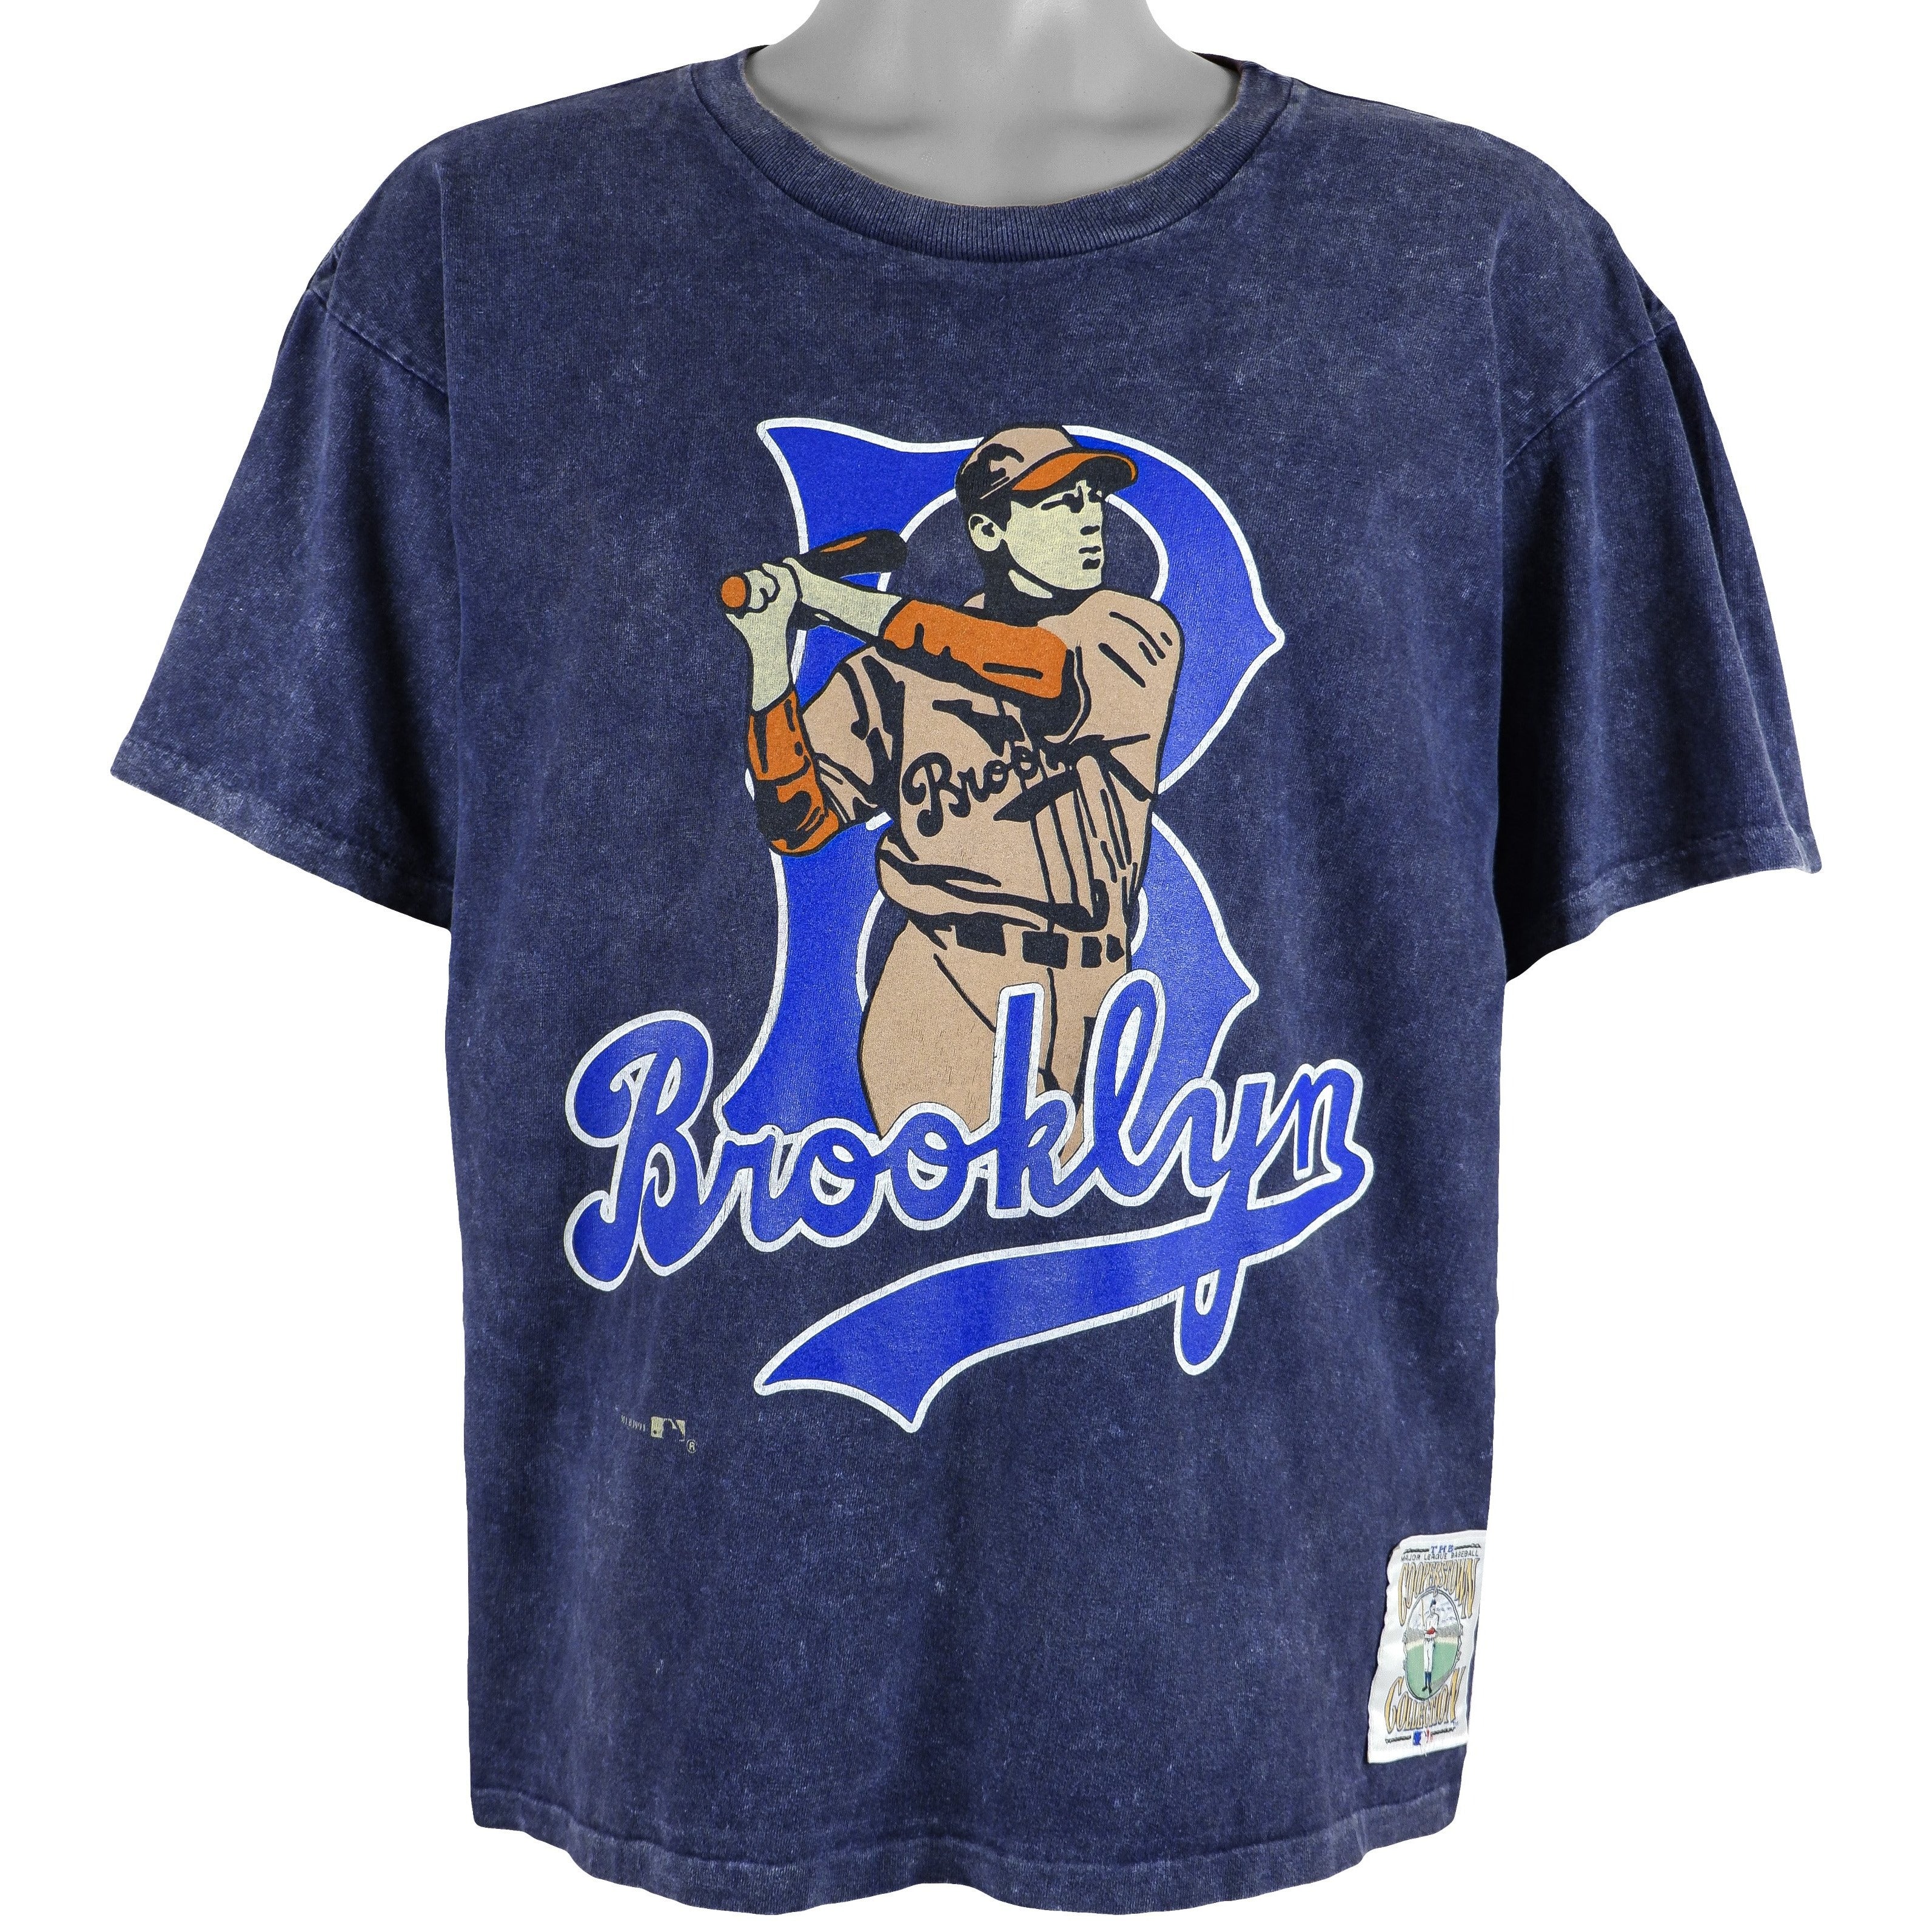 Vintage 90's Brooklyn Dodgers Baseball MLB T Shirt Size L